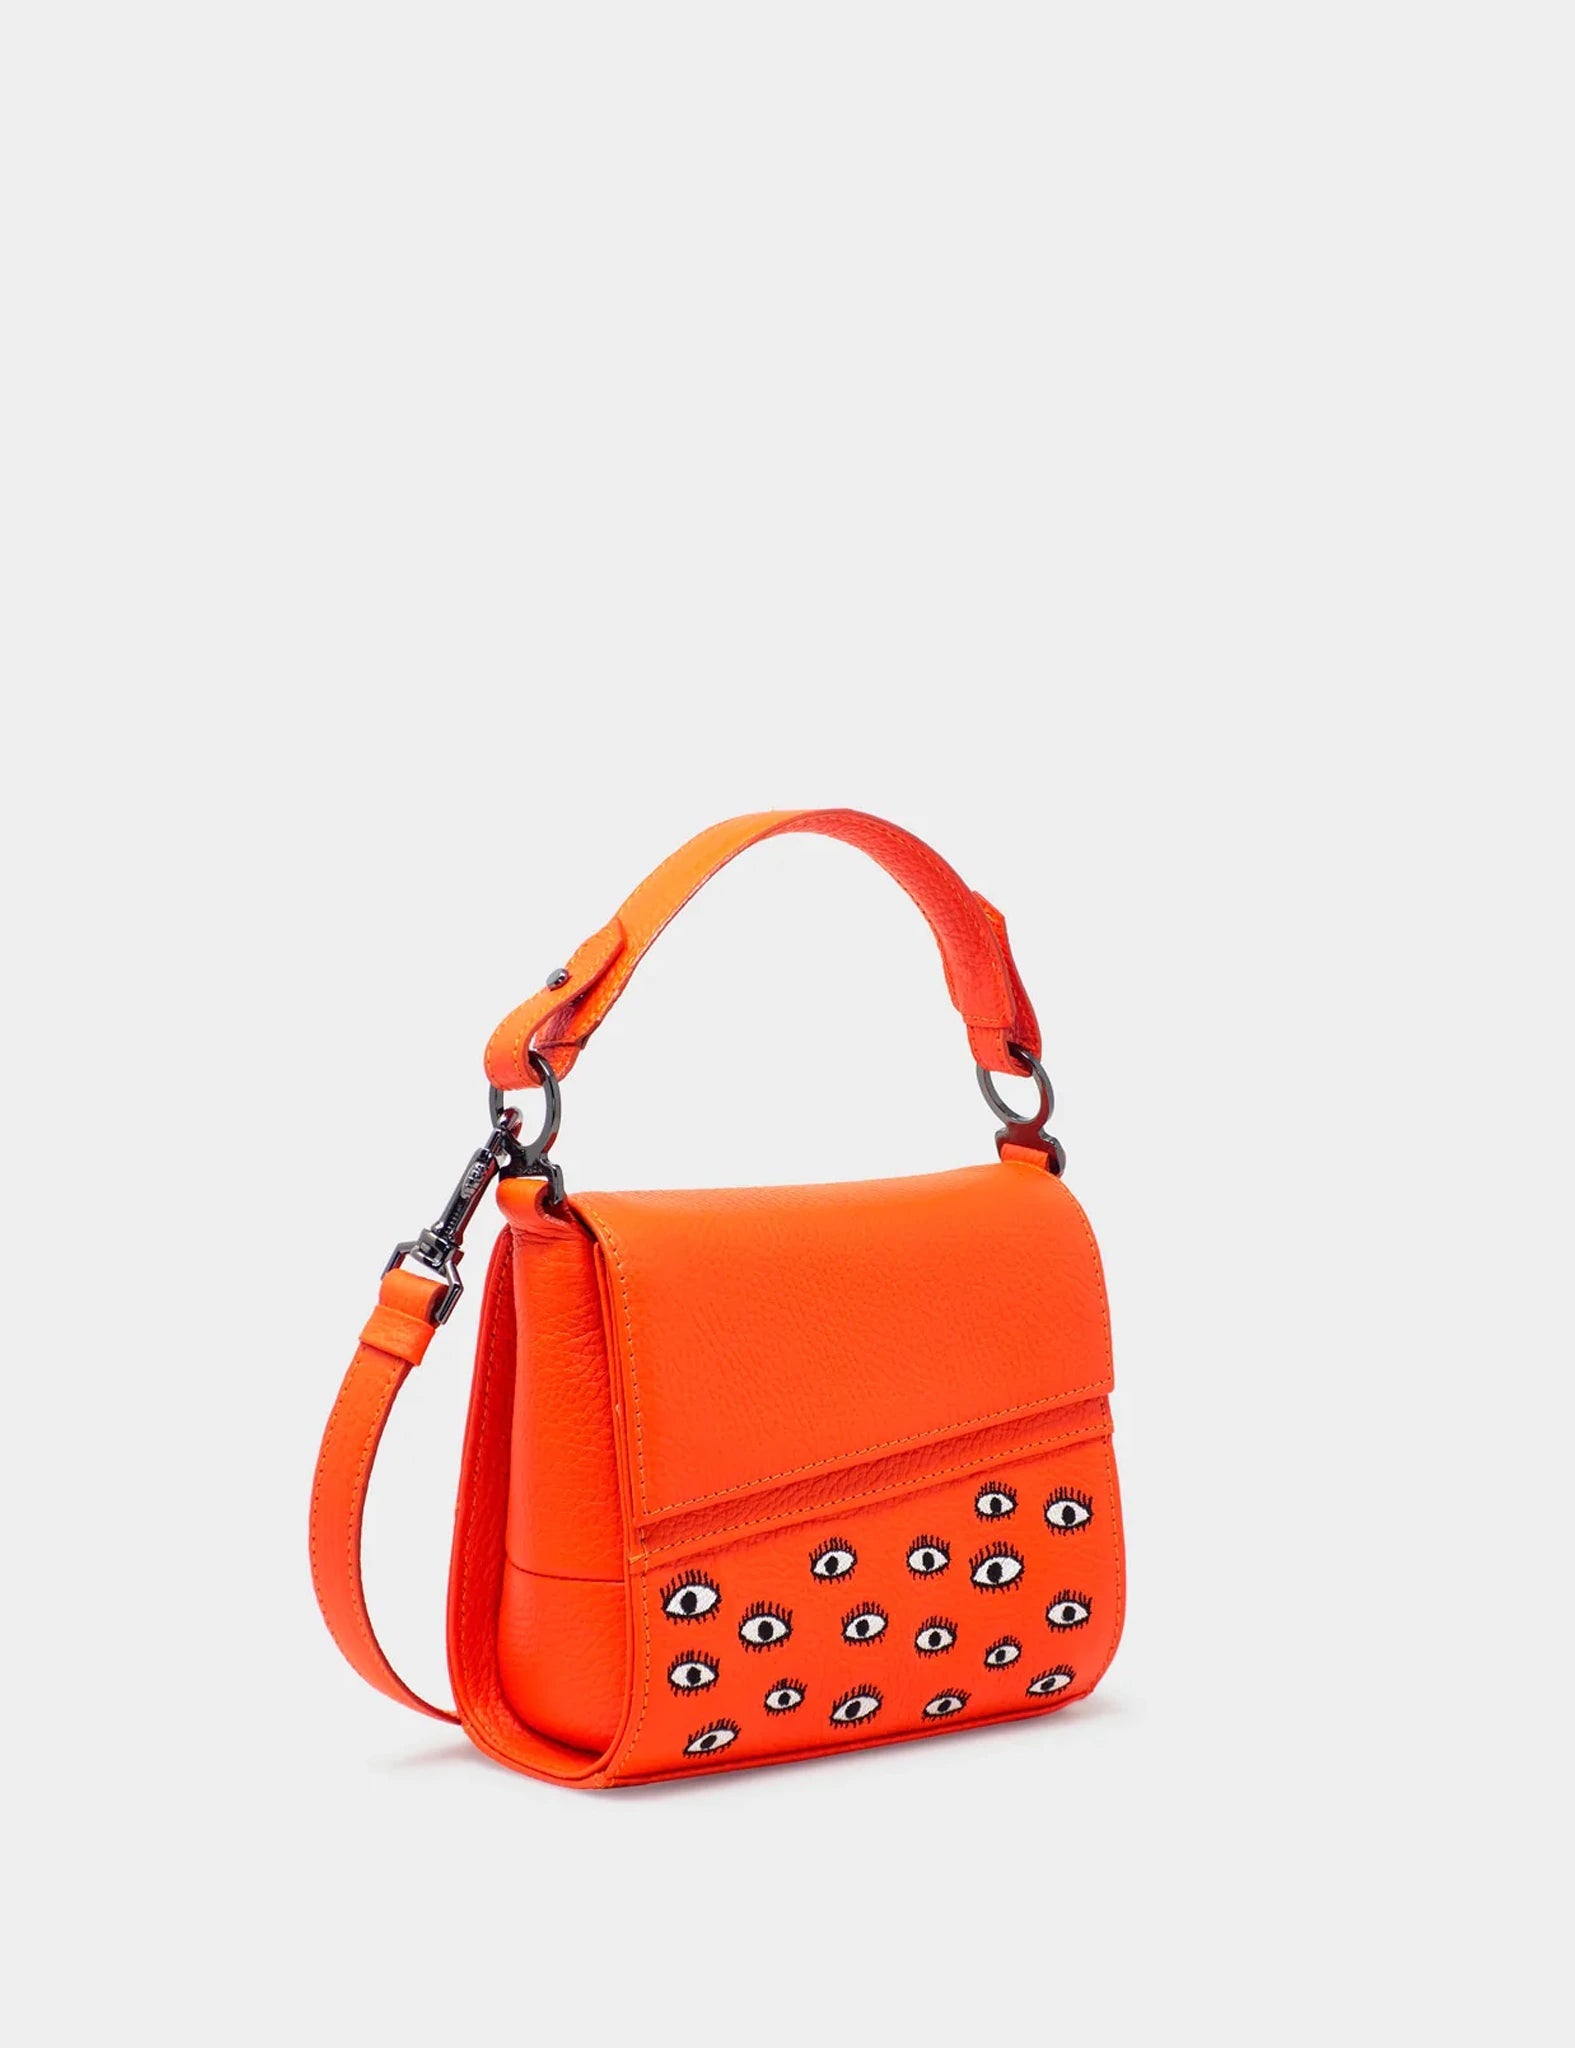 Anastasio Micro Crossbody Handbag Neon Orange Leather - Eyes Embroidery - Front corner angle view